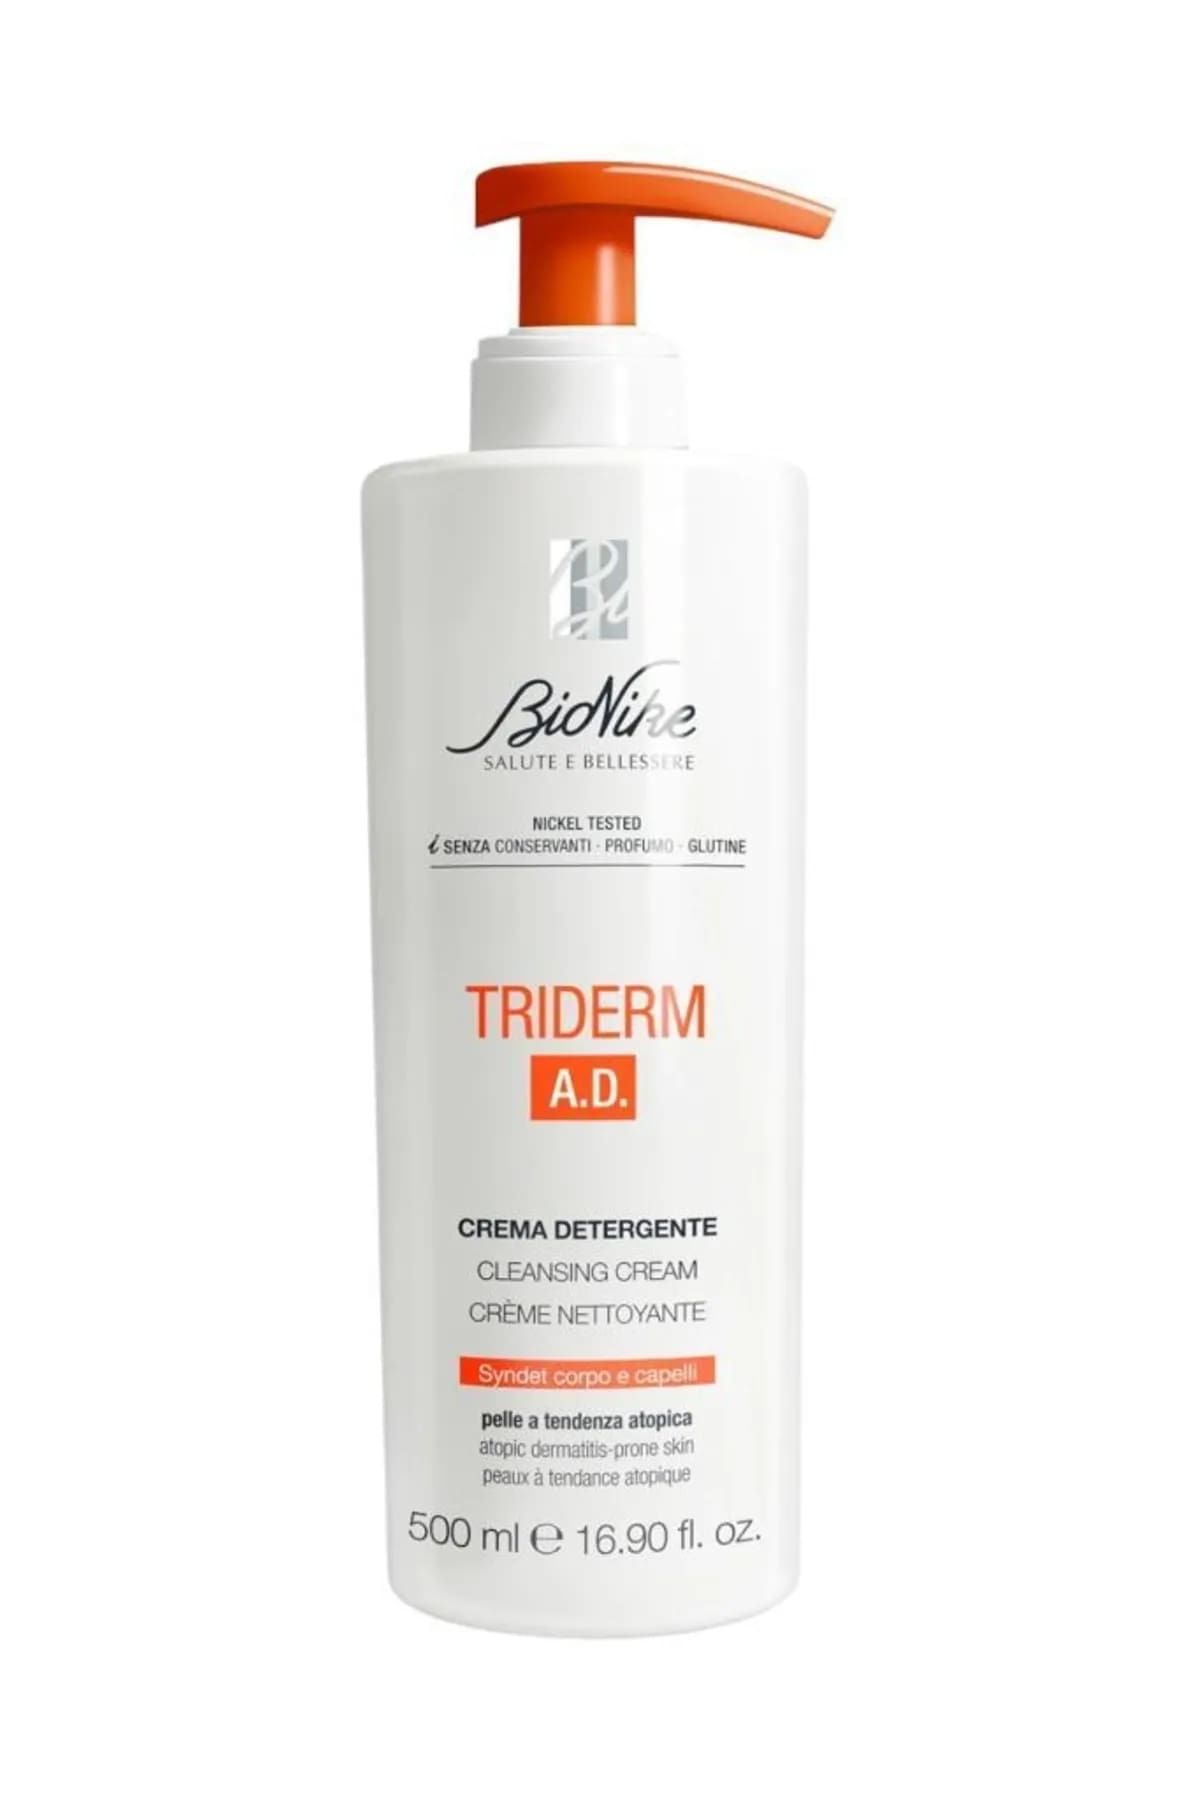 BioNike Bıonıke Triderm A.d. Cleansing Cream 500 ml